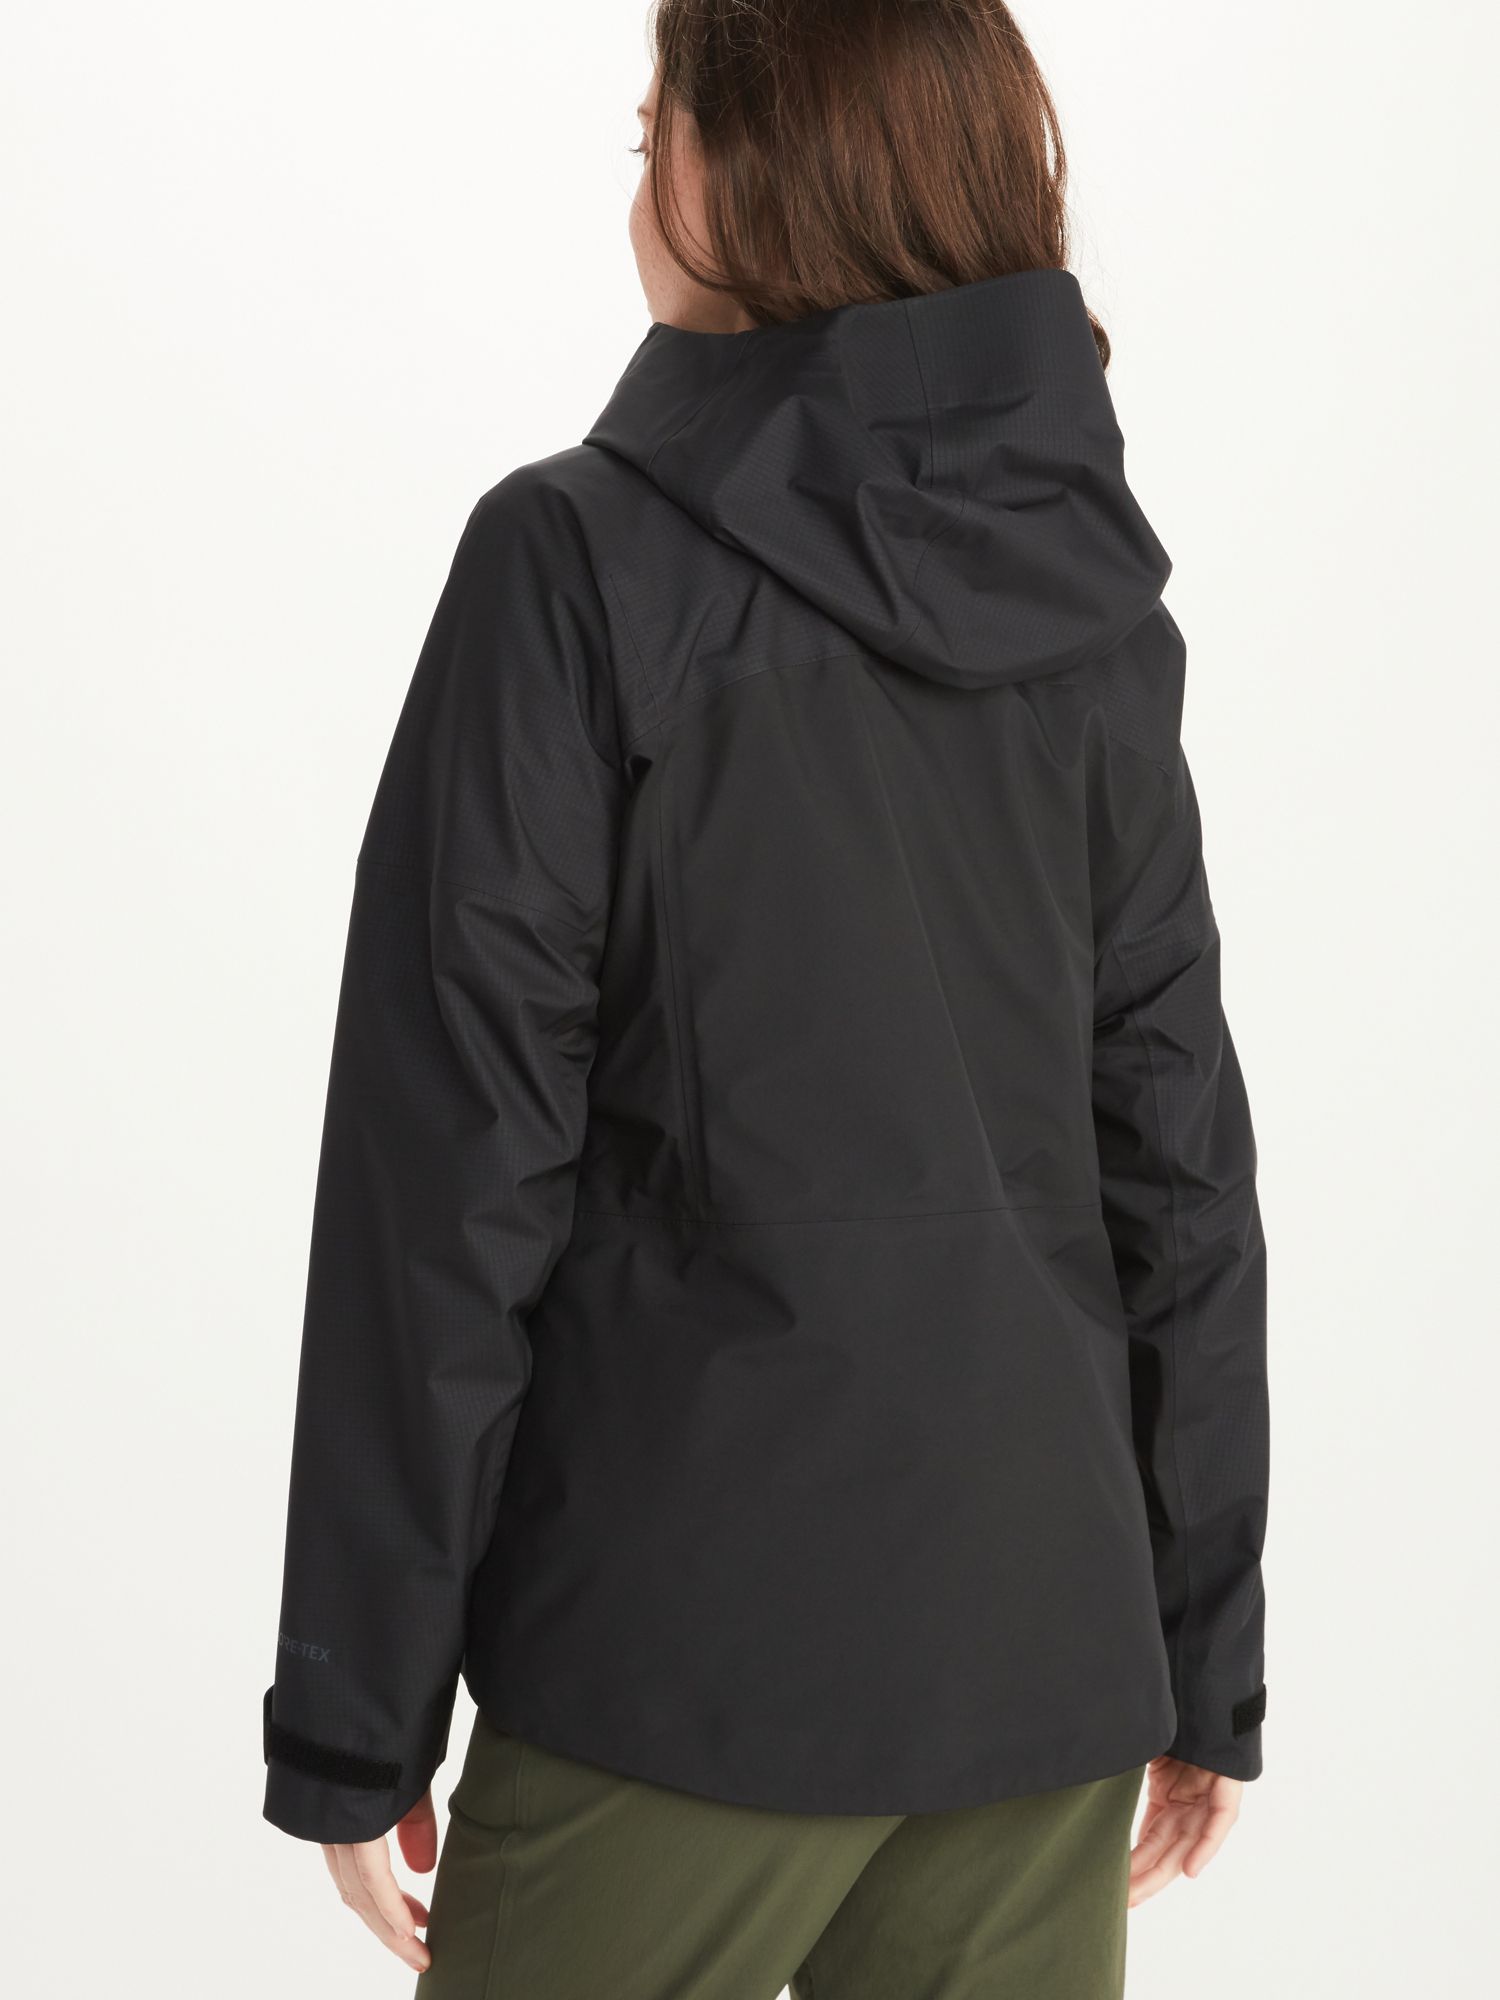 Women's Mitre Peak Jacket